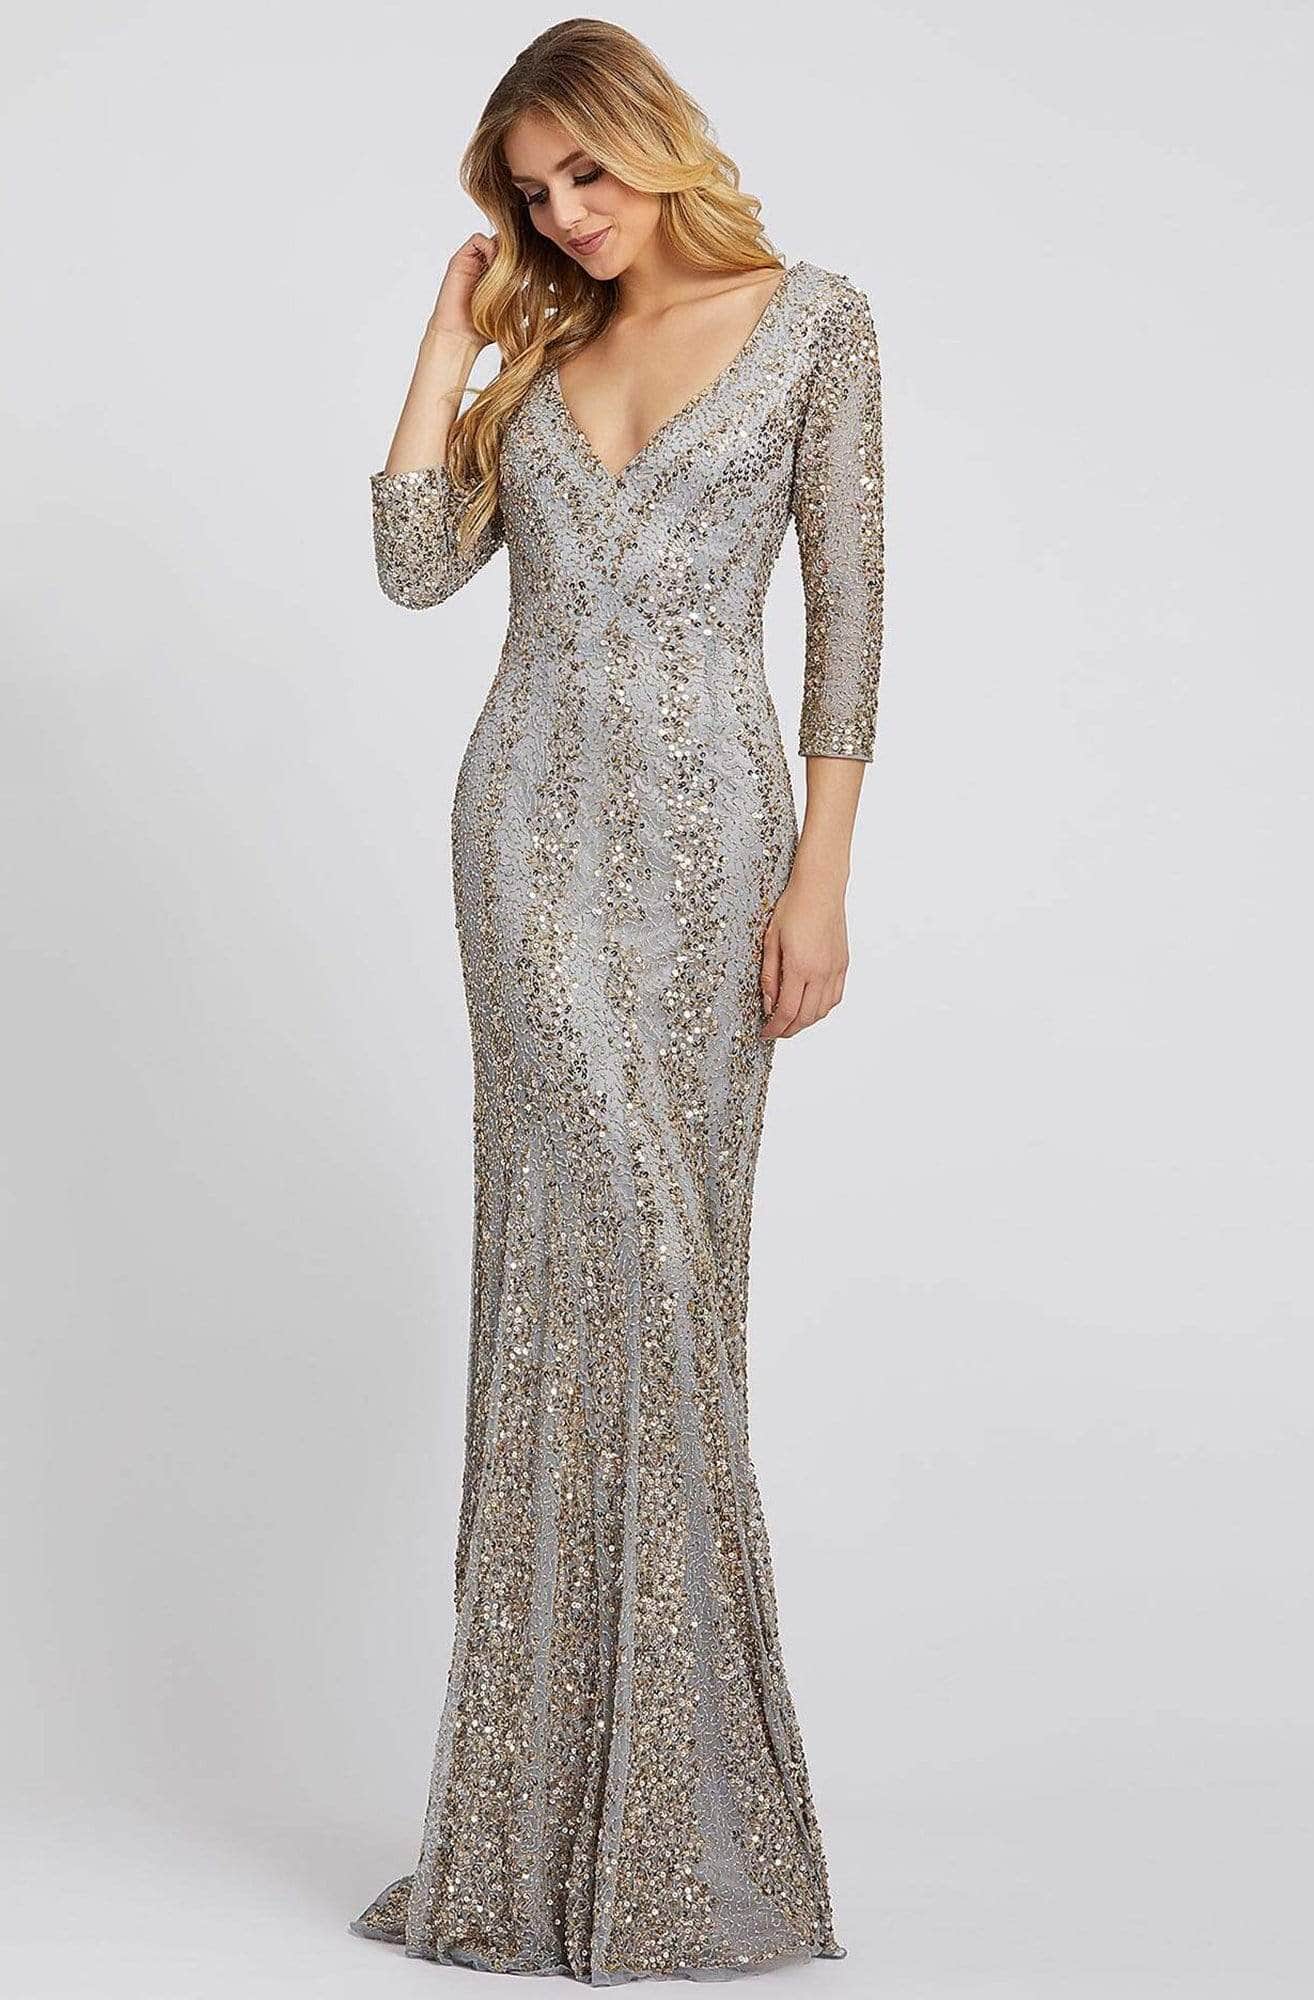 Mac Duggal - Sequined Dress Style 4247D Evening Dresses